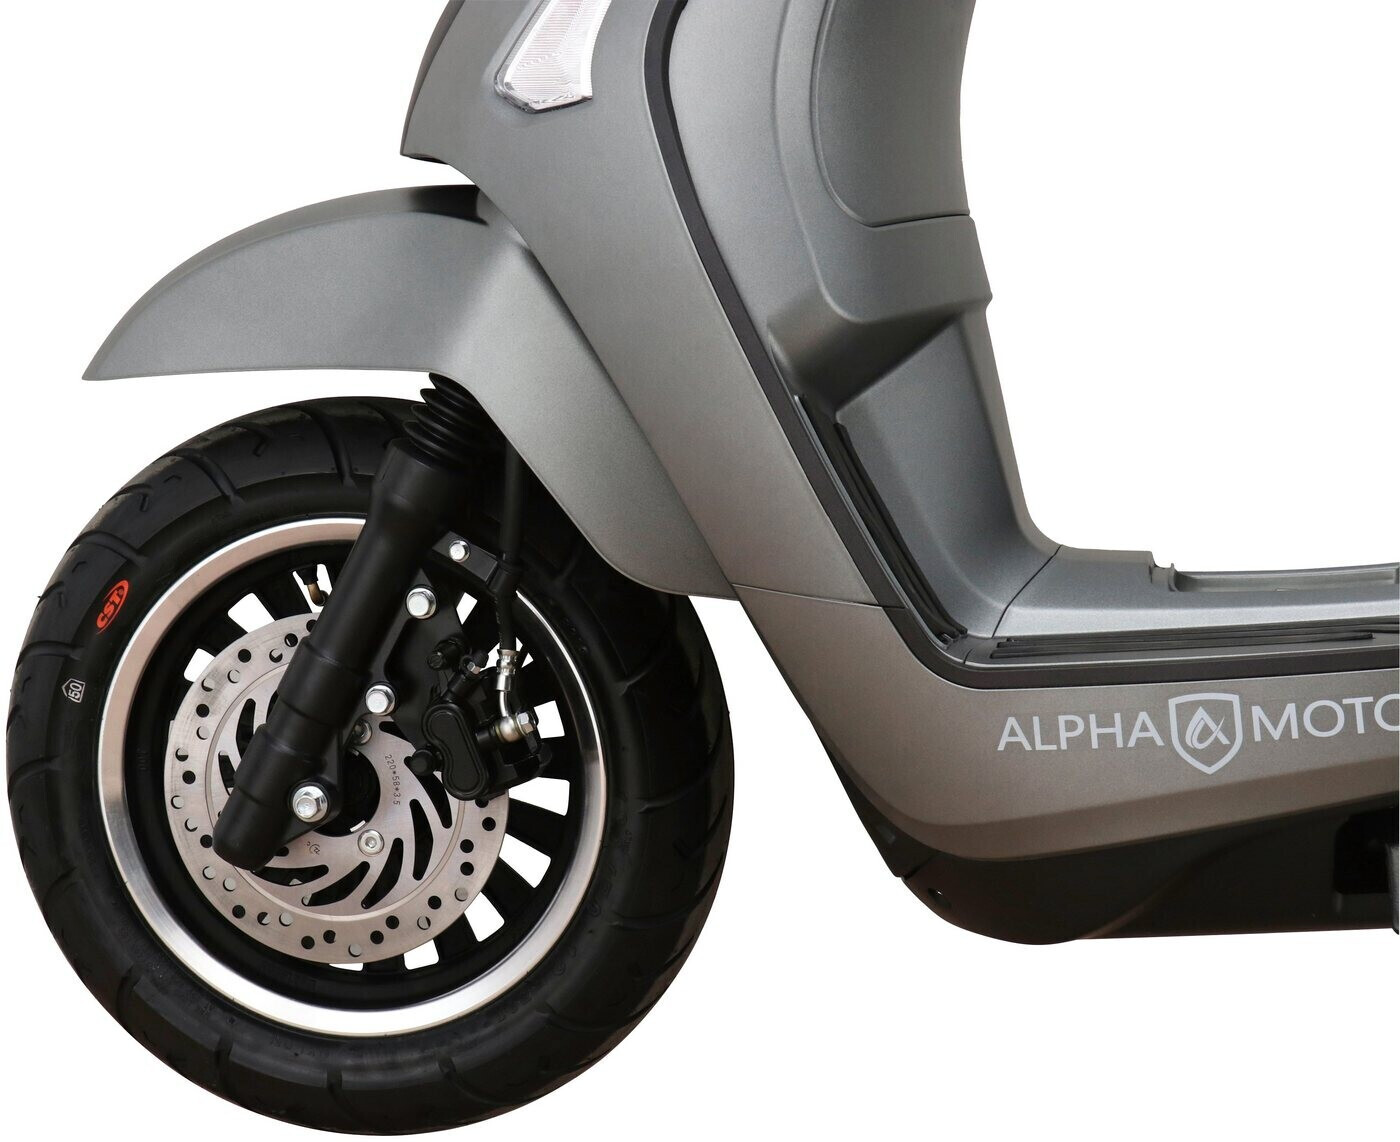 Alpha Motors Vita 125 € 2.041,05 grau ab bei | ccm Preisvergleich